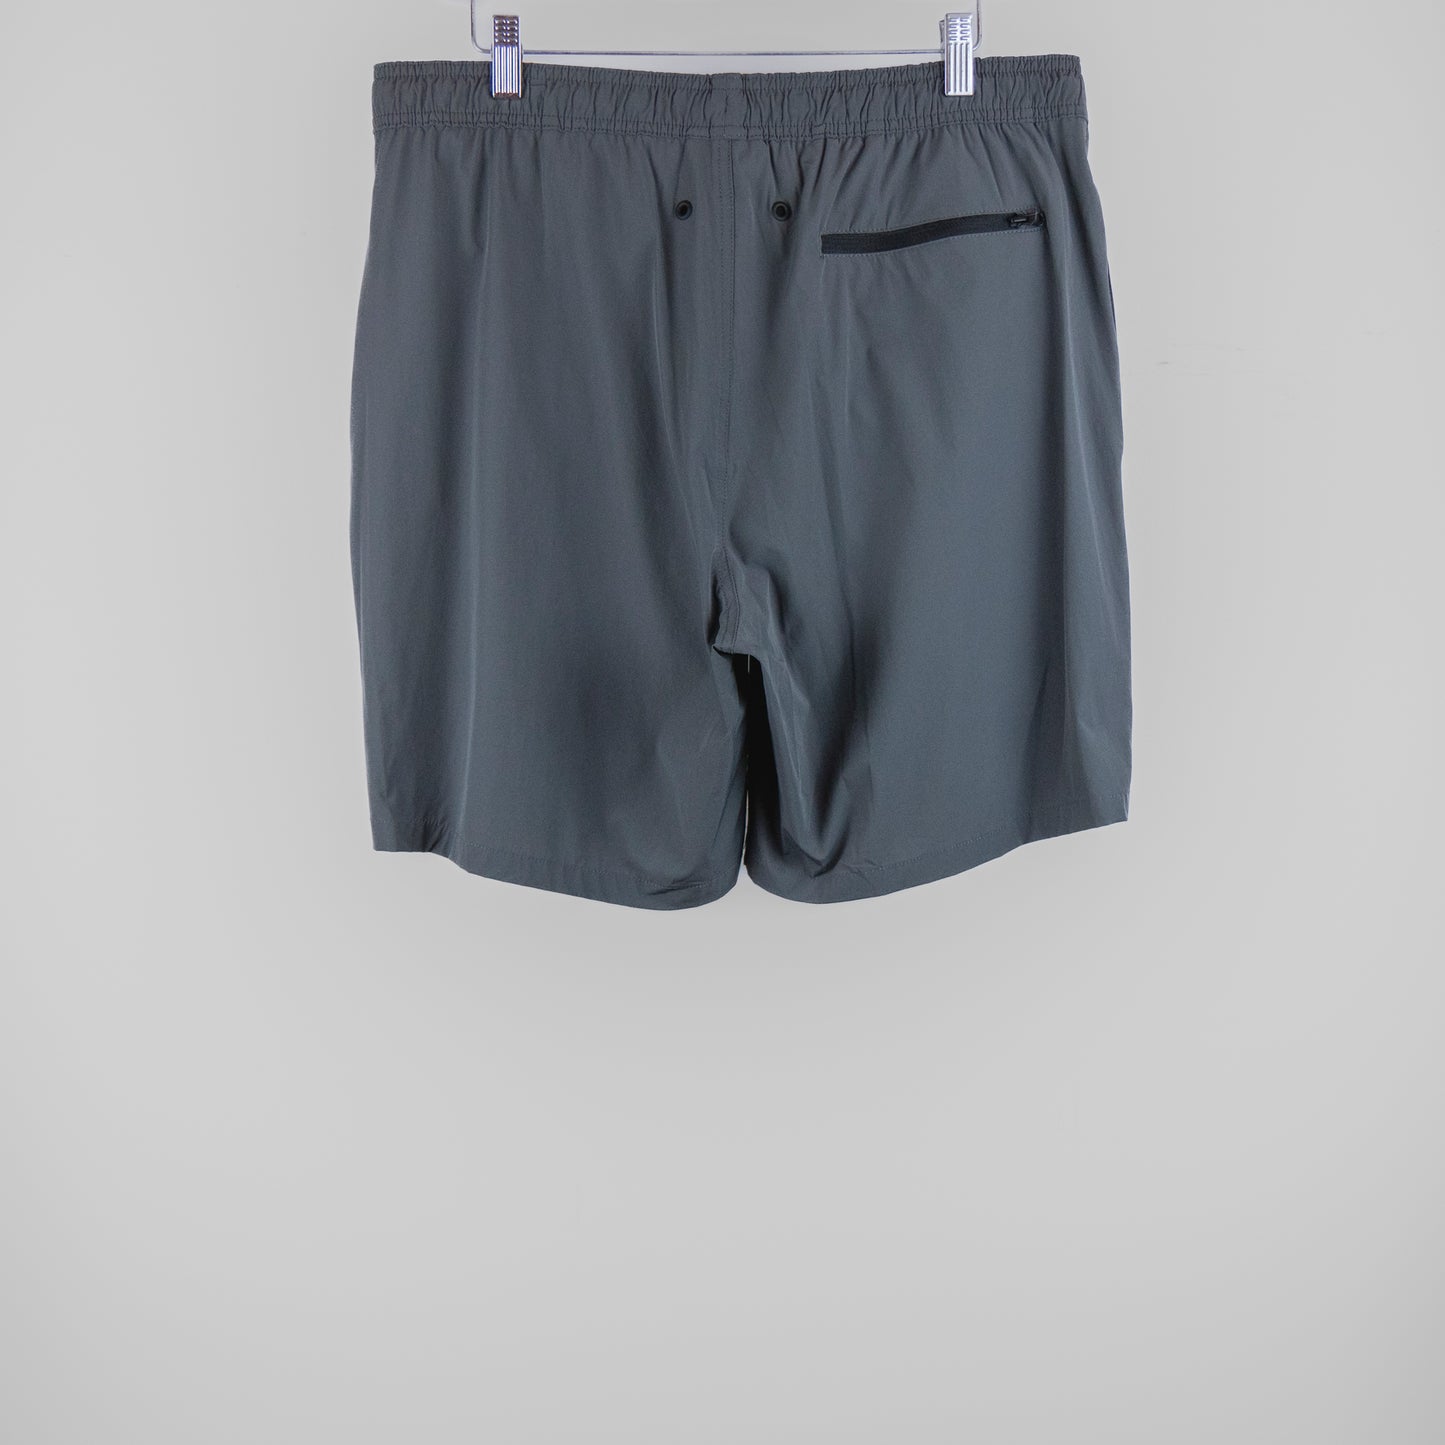 Calvin Klein - Standard UV Protected Quick Dry Swim Trunk - Grey